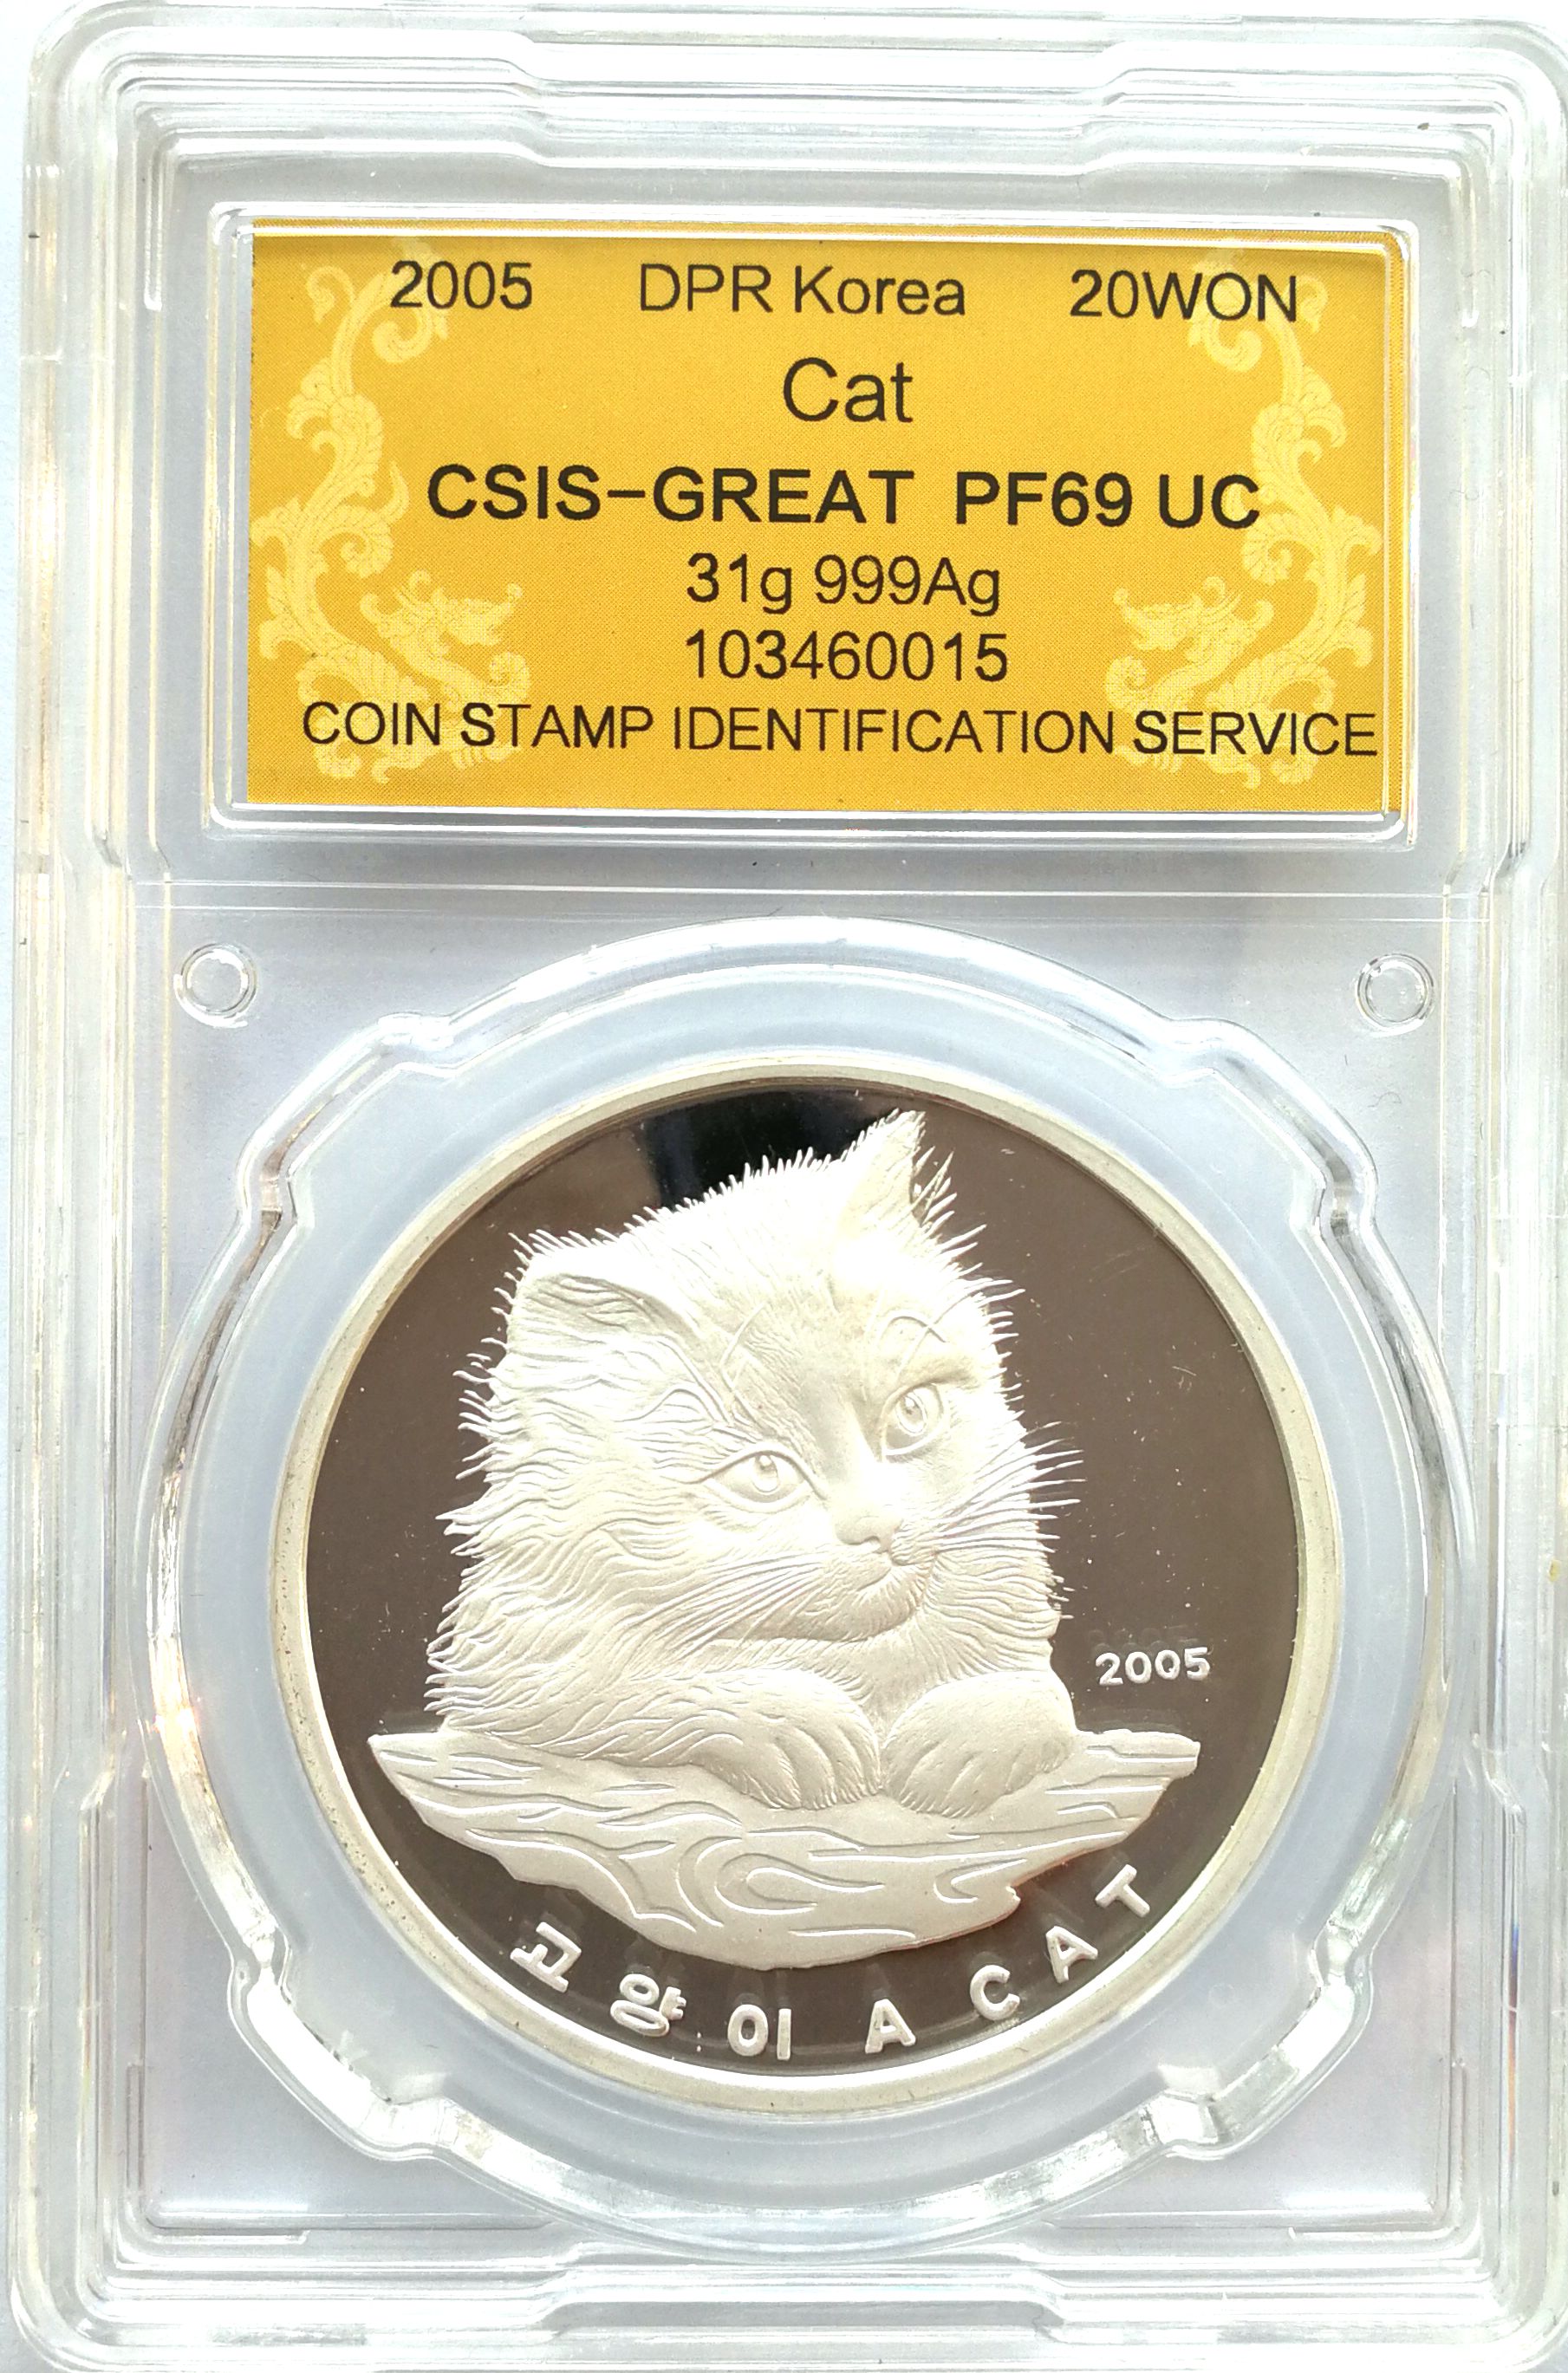 L3600, Korea "Persian Cat" Proof Silver Coin 2005, CSIS Grade